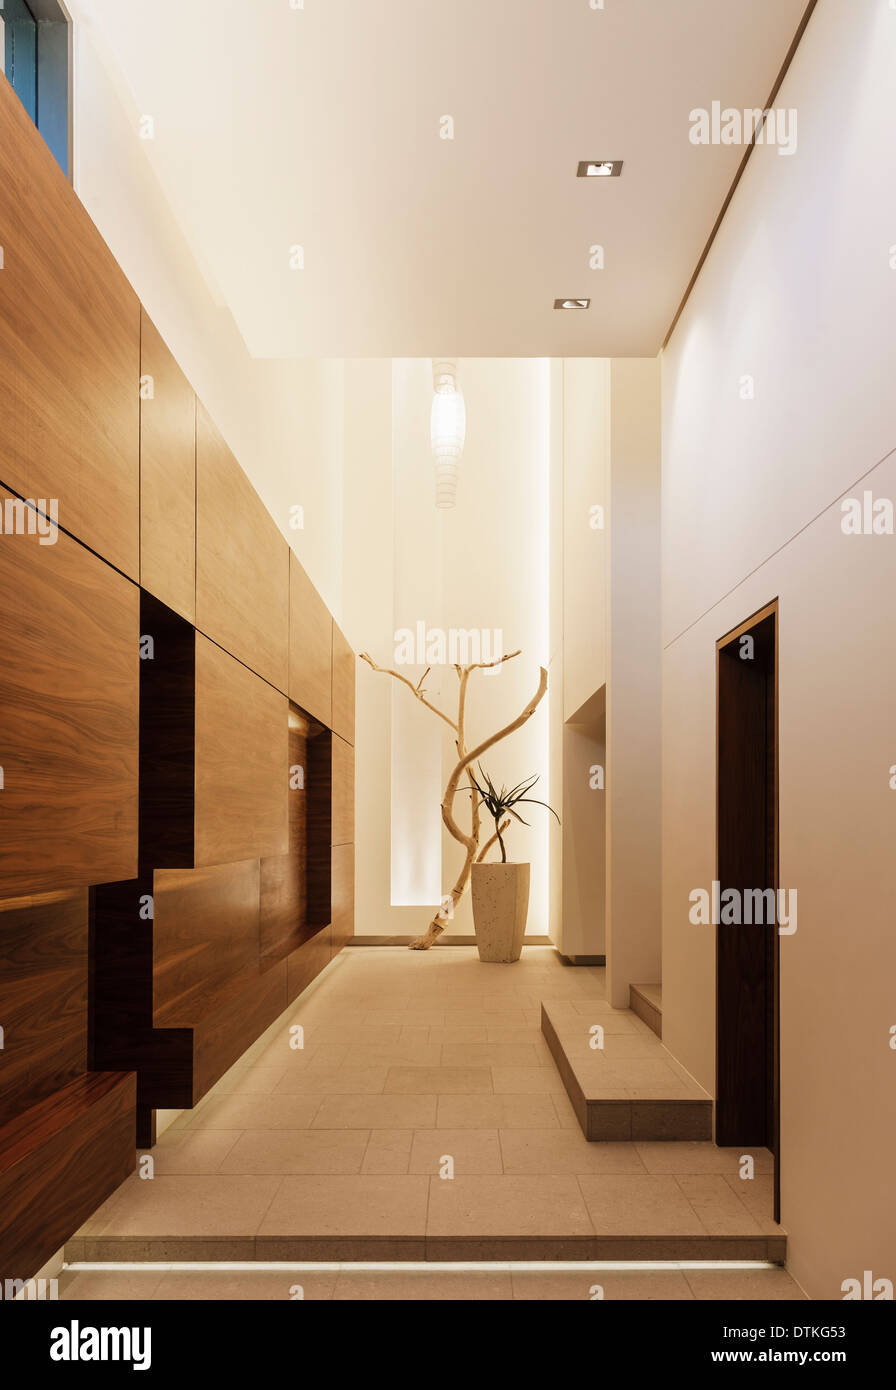 Wood paneling in modern corridor Stock Photo